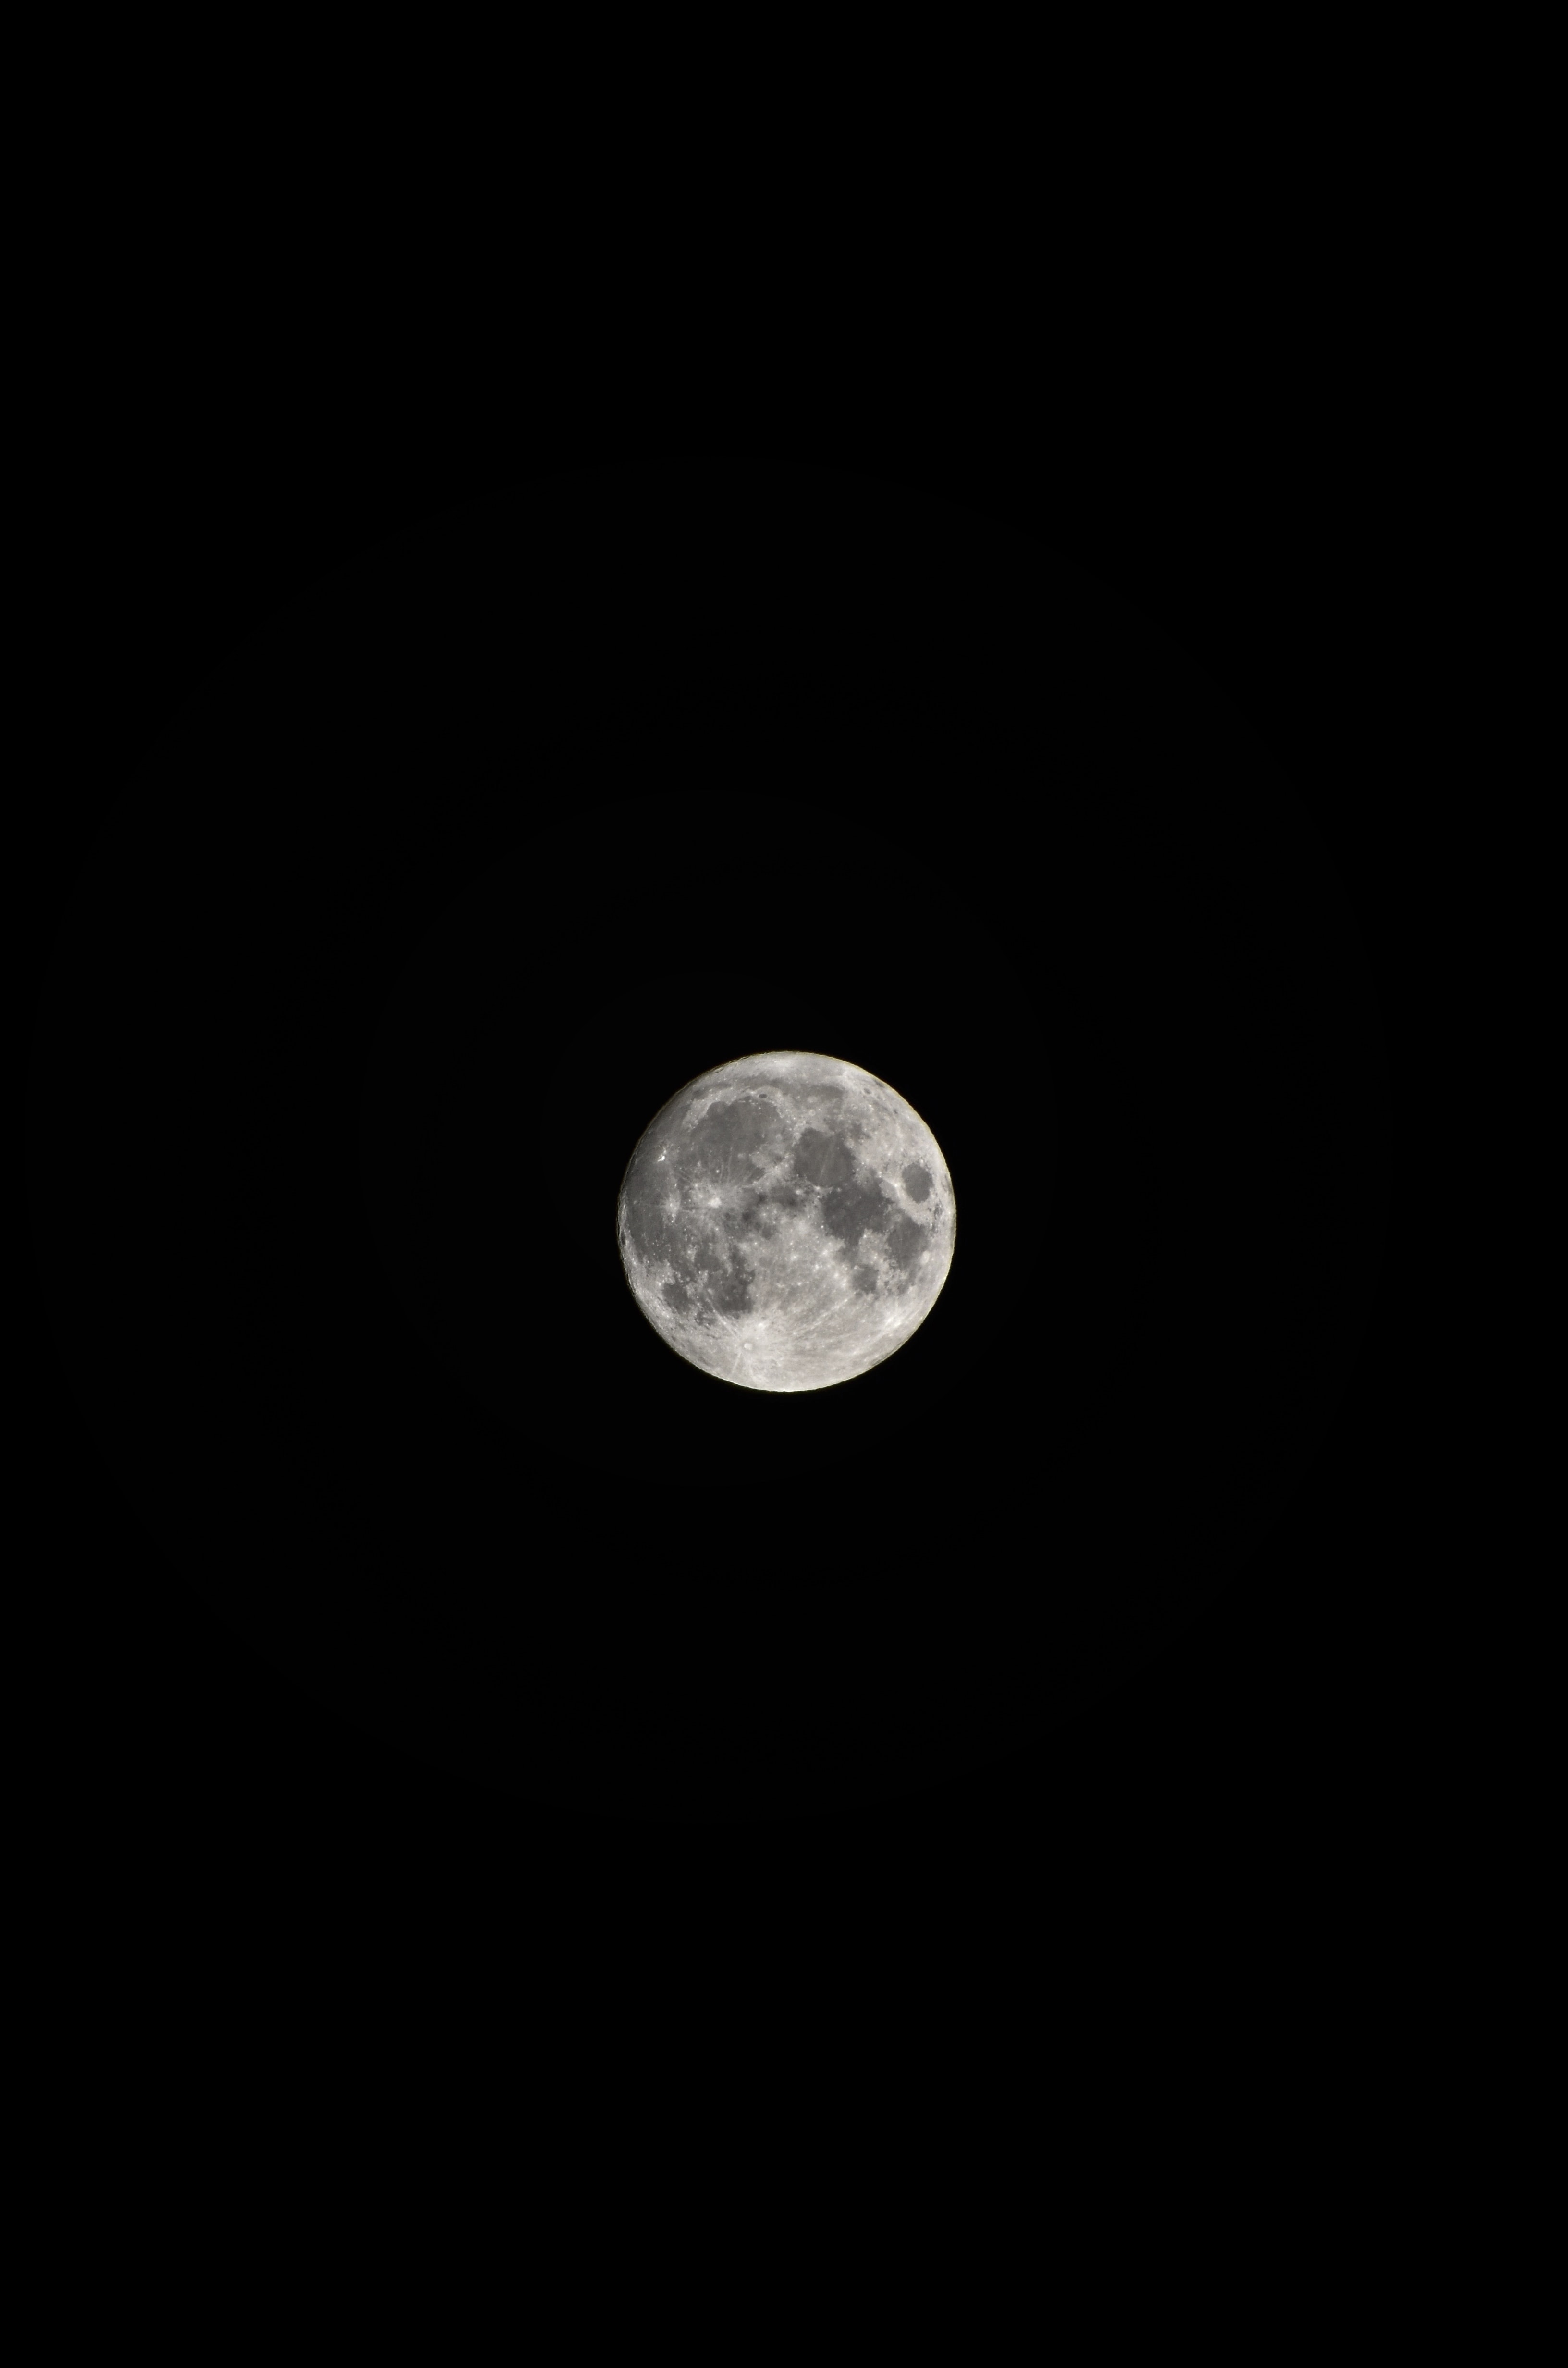 moon, night, black, dark, craters Smartphone Background